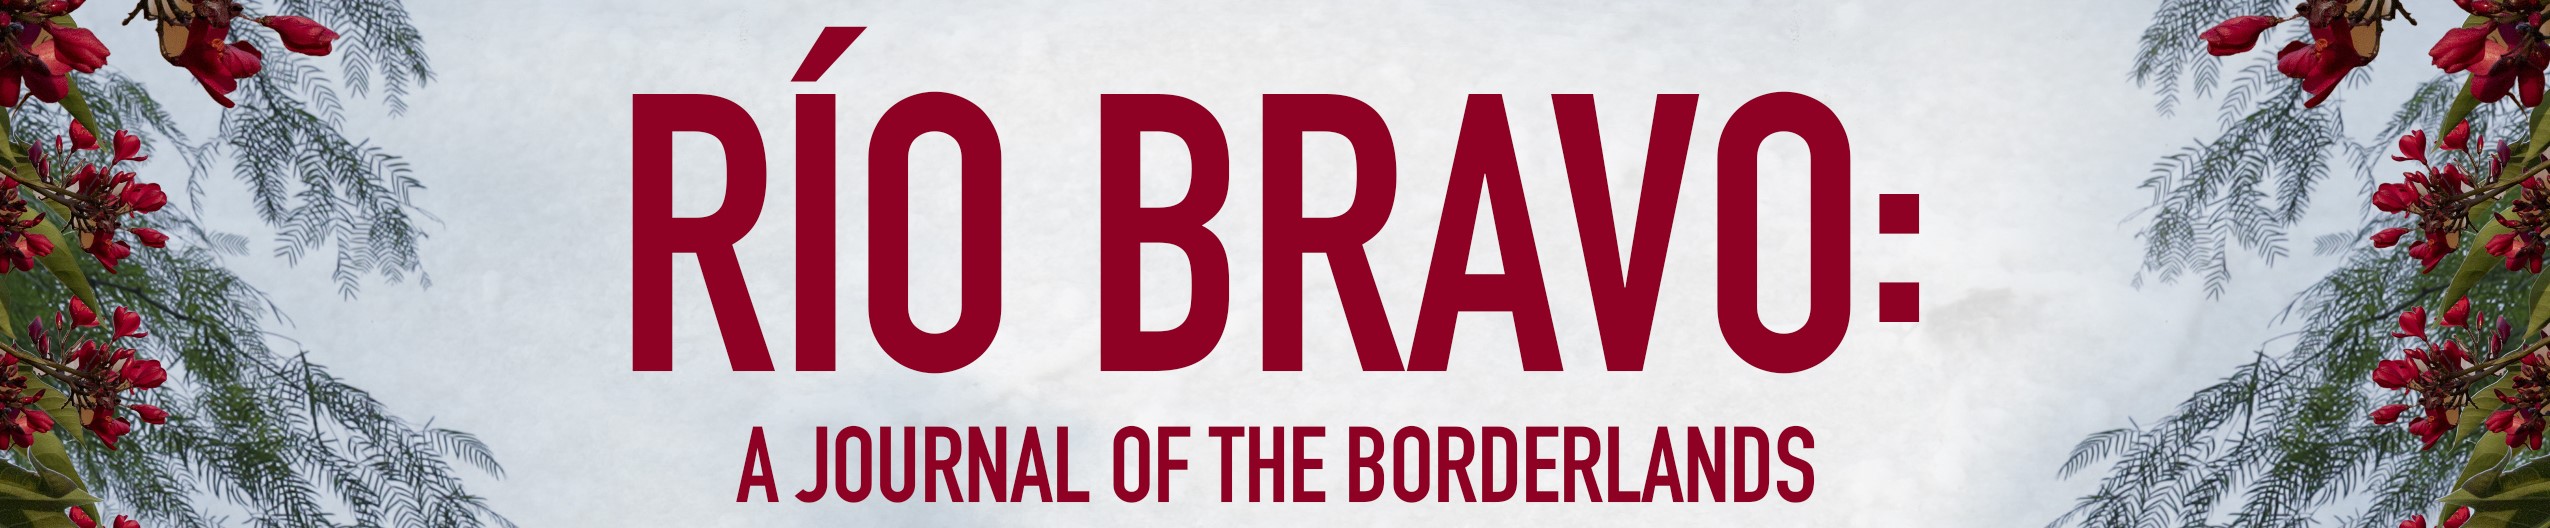 Rio Bravo: A Journal of the Borderlands